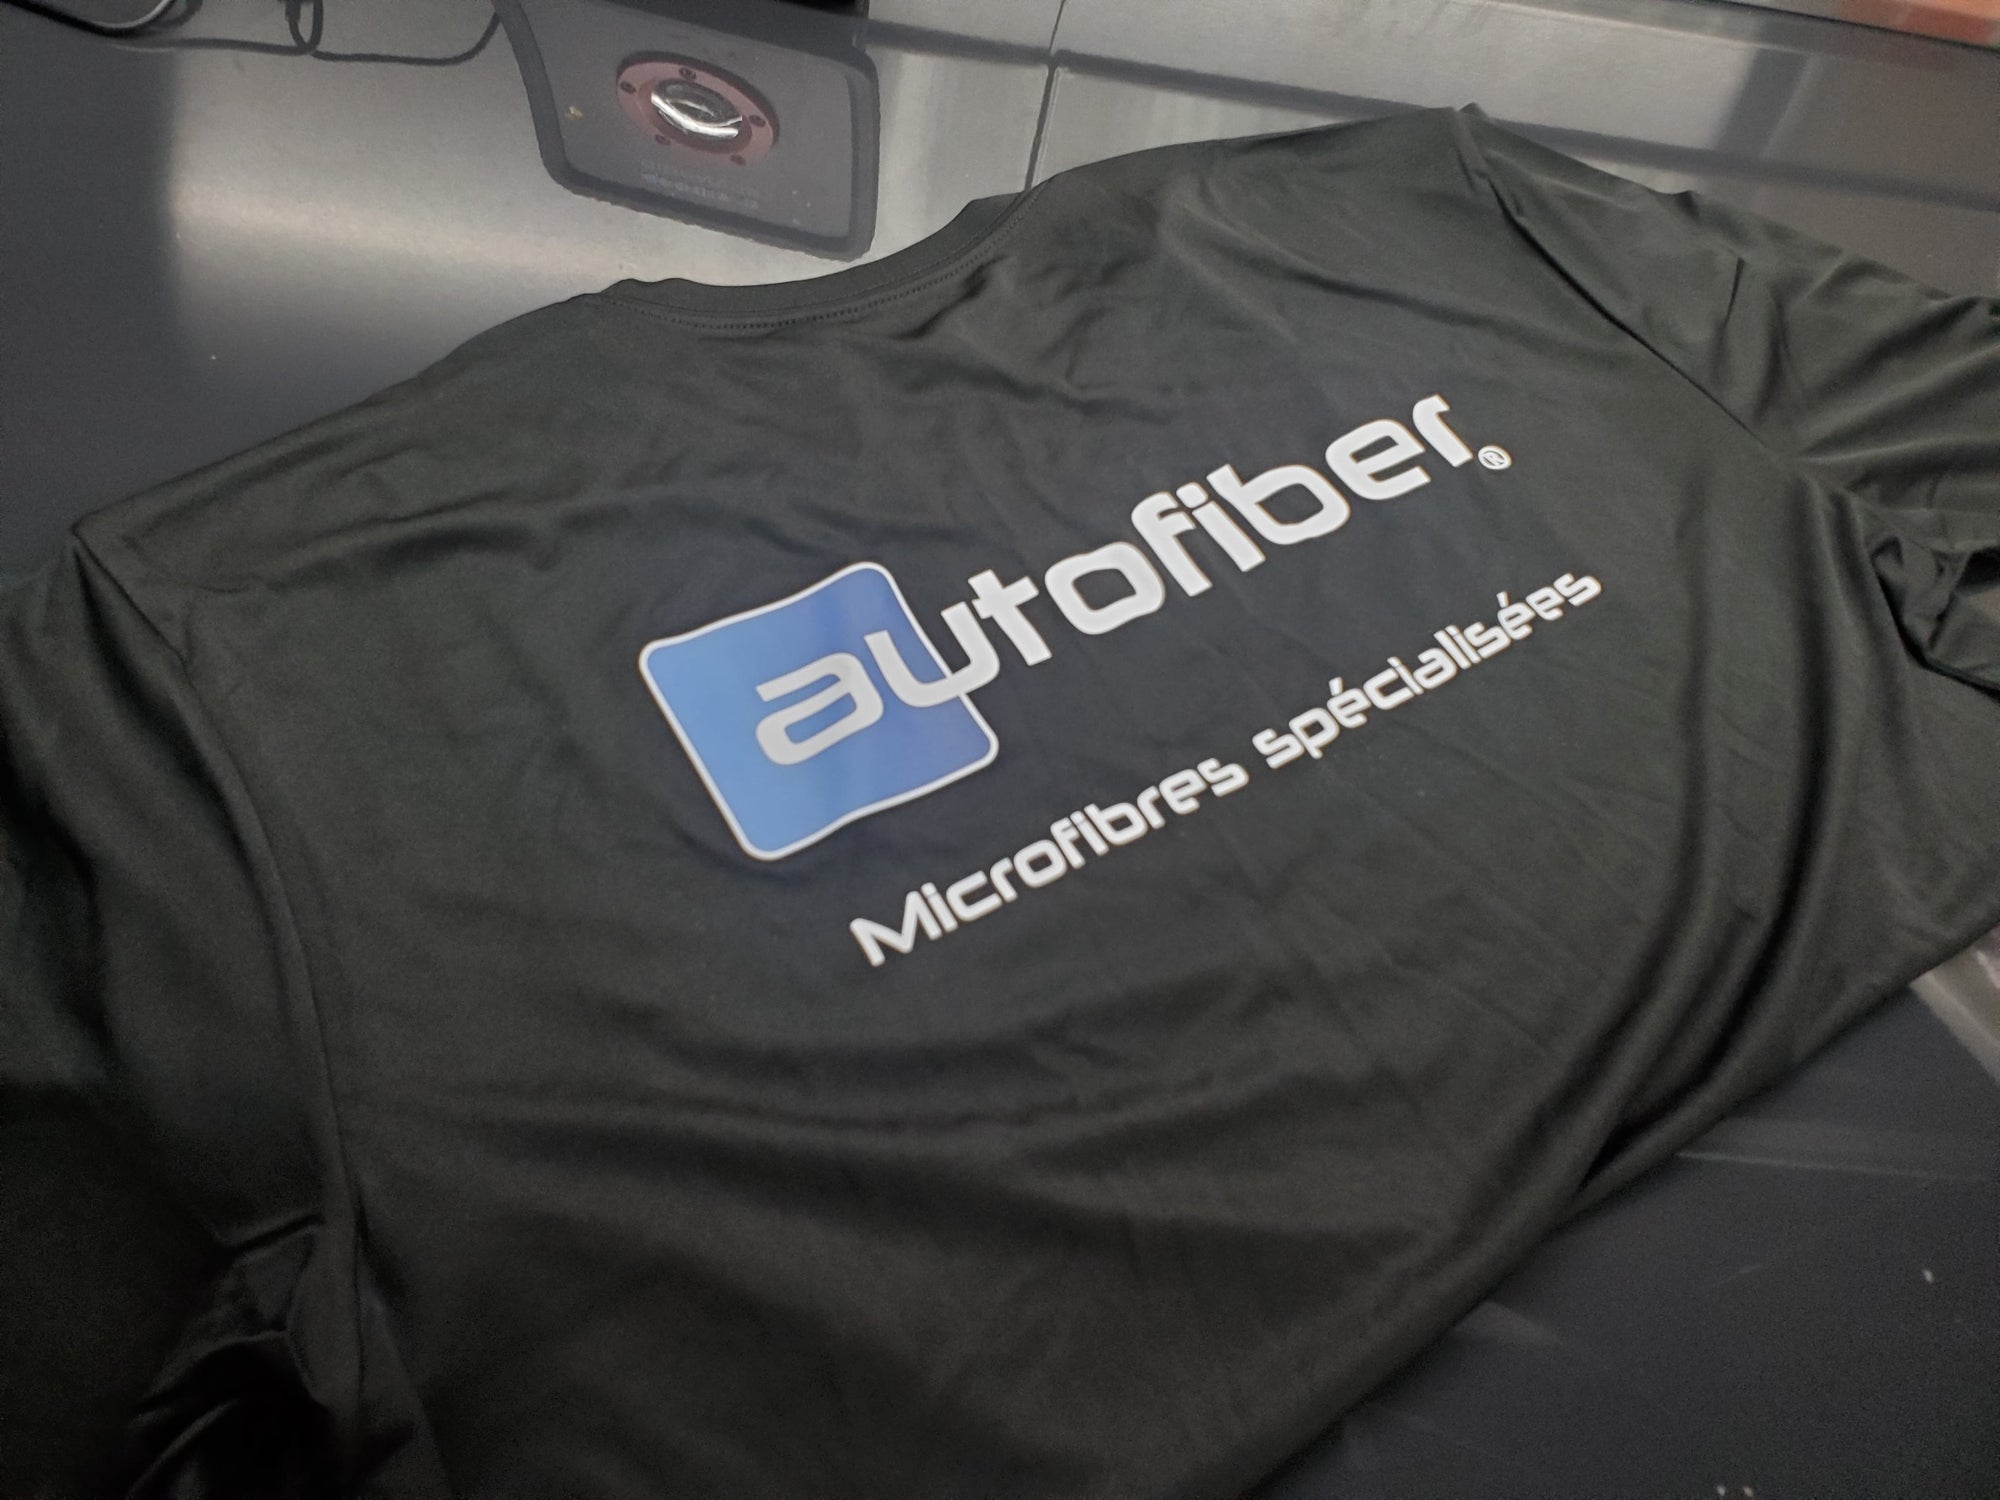 Autofiber "Specialized Microfiber" T-Shirt